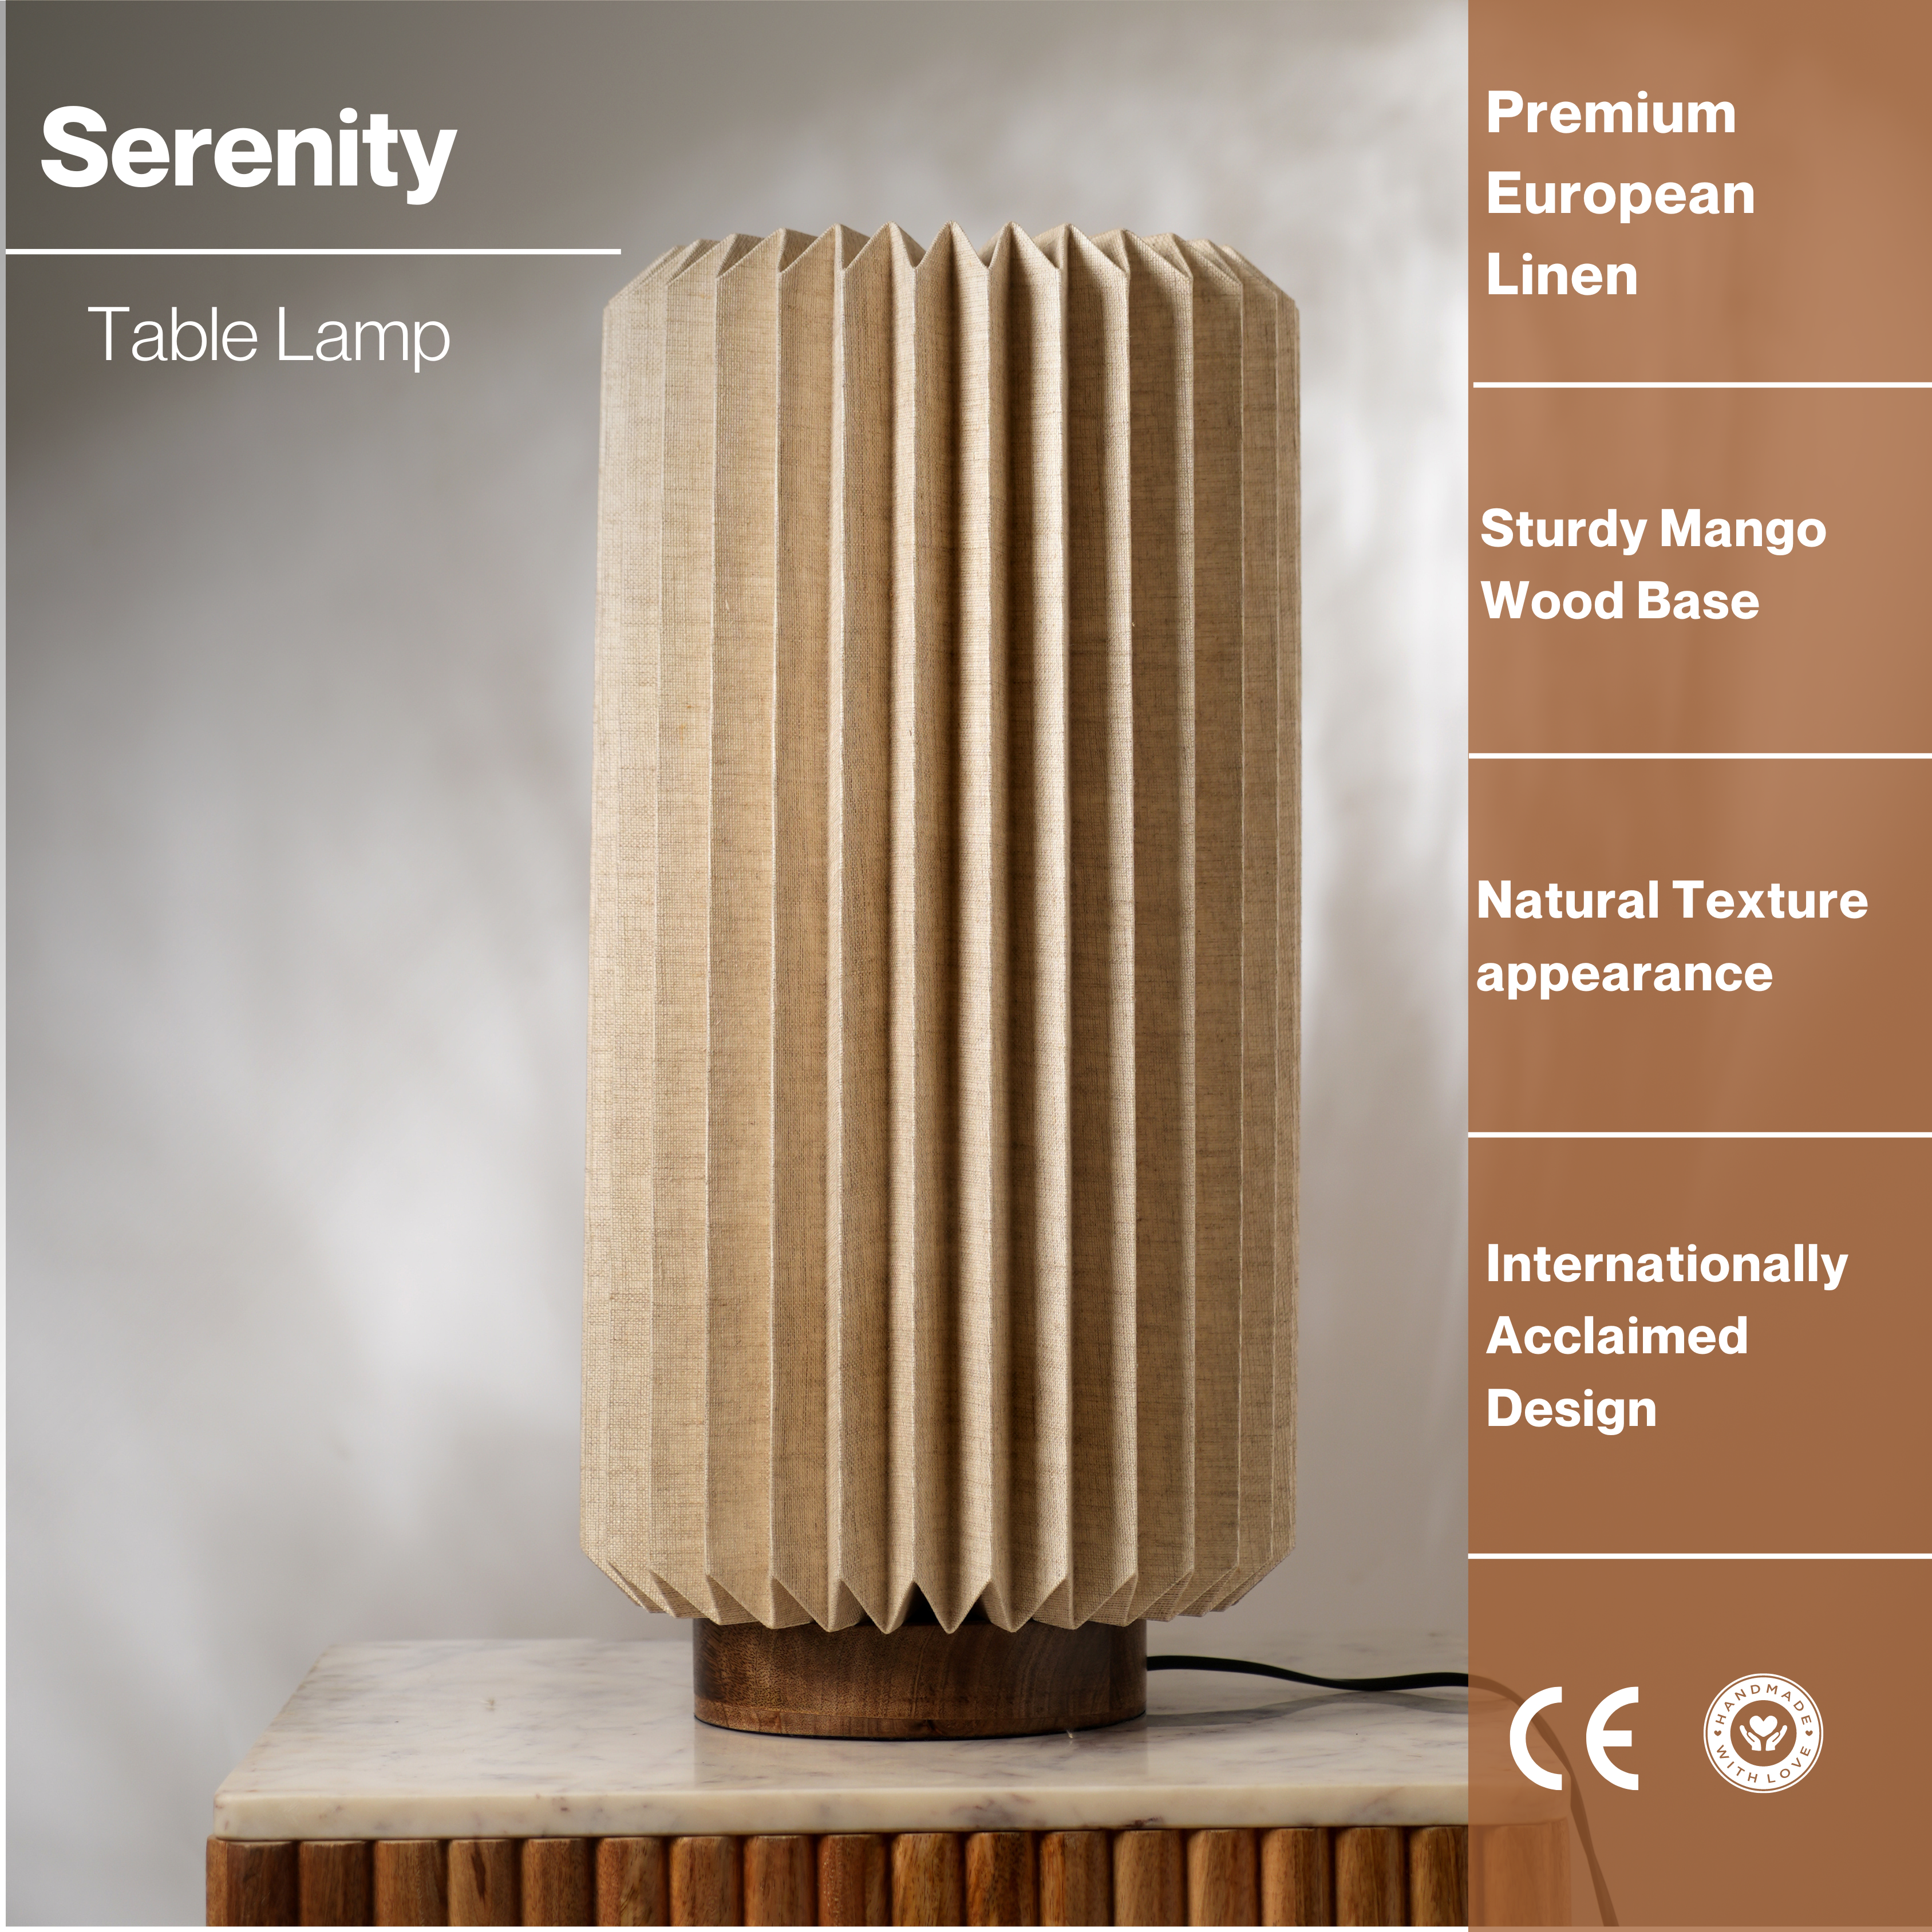 Serenity Table Lamp - Linen Bedside Lamp - Mango Wood Base Desk Lamp